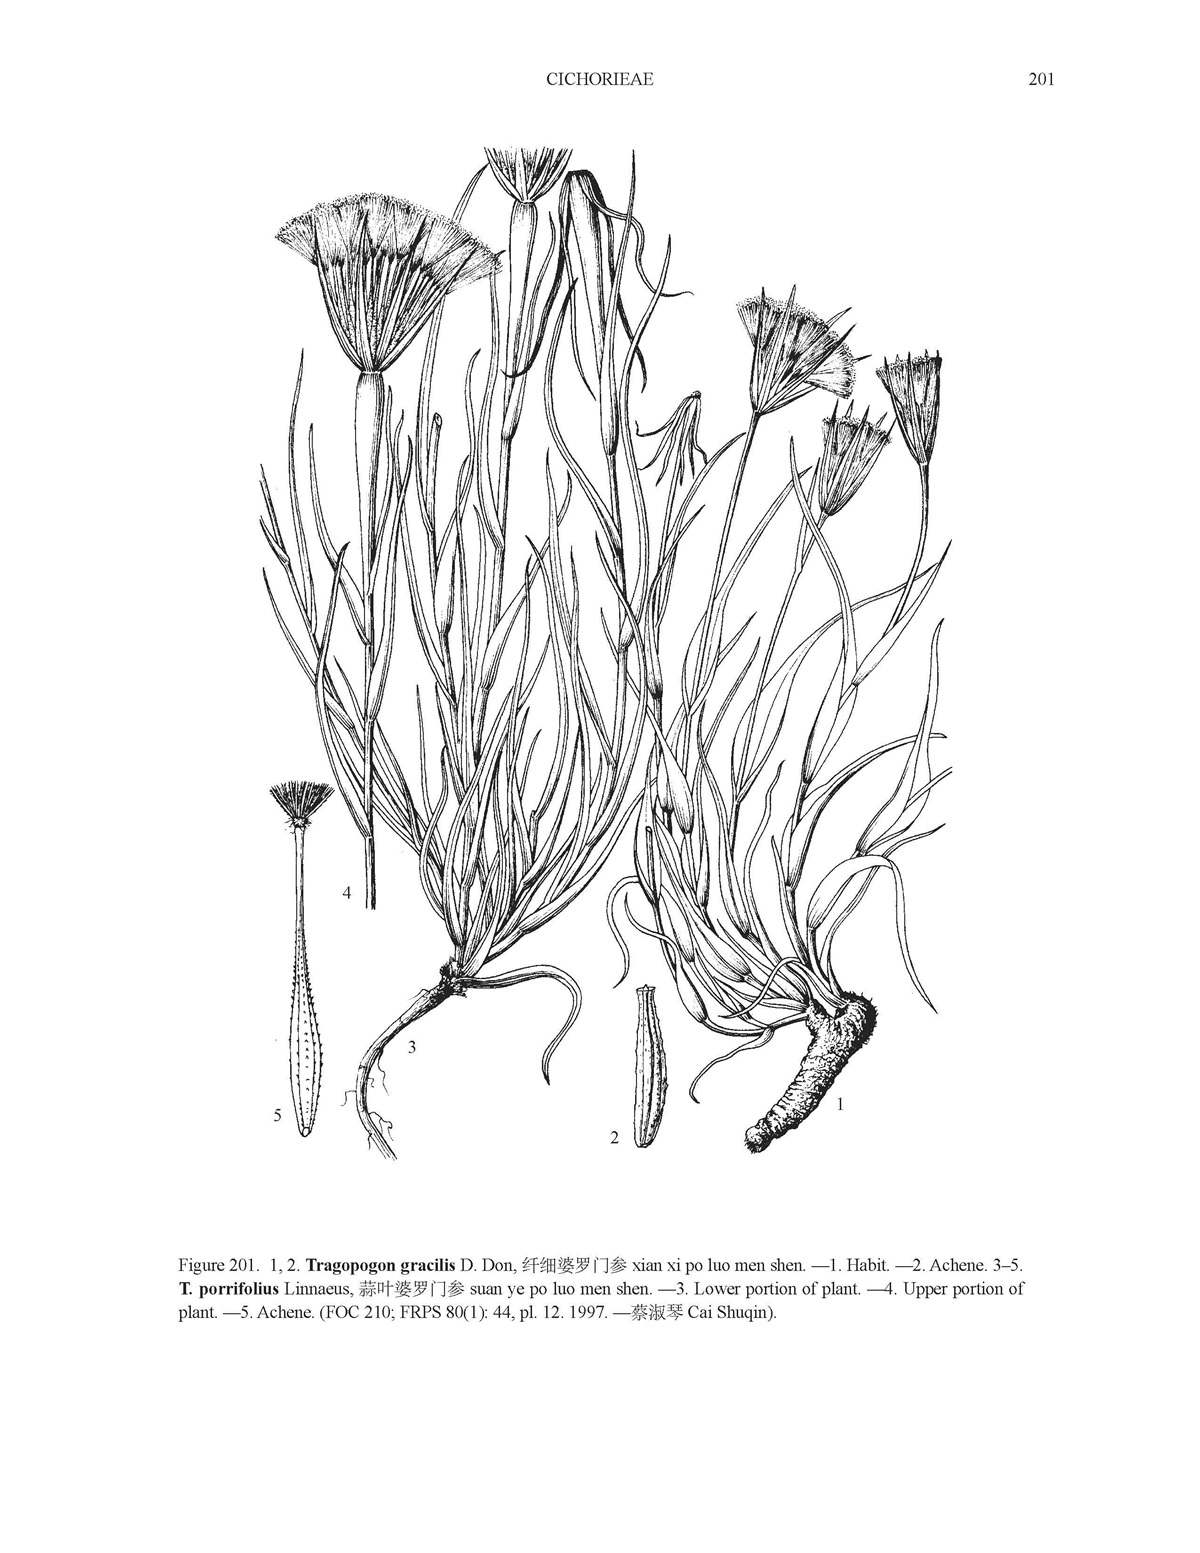 Tragopogon gracilis illustration